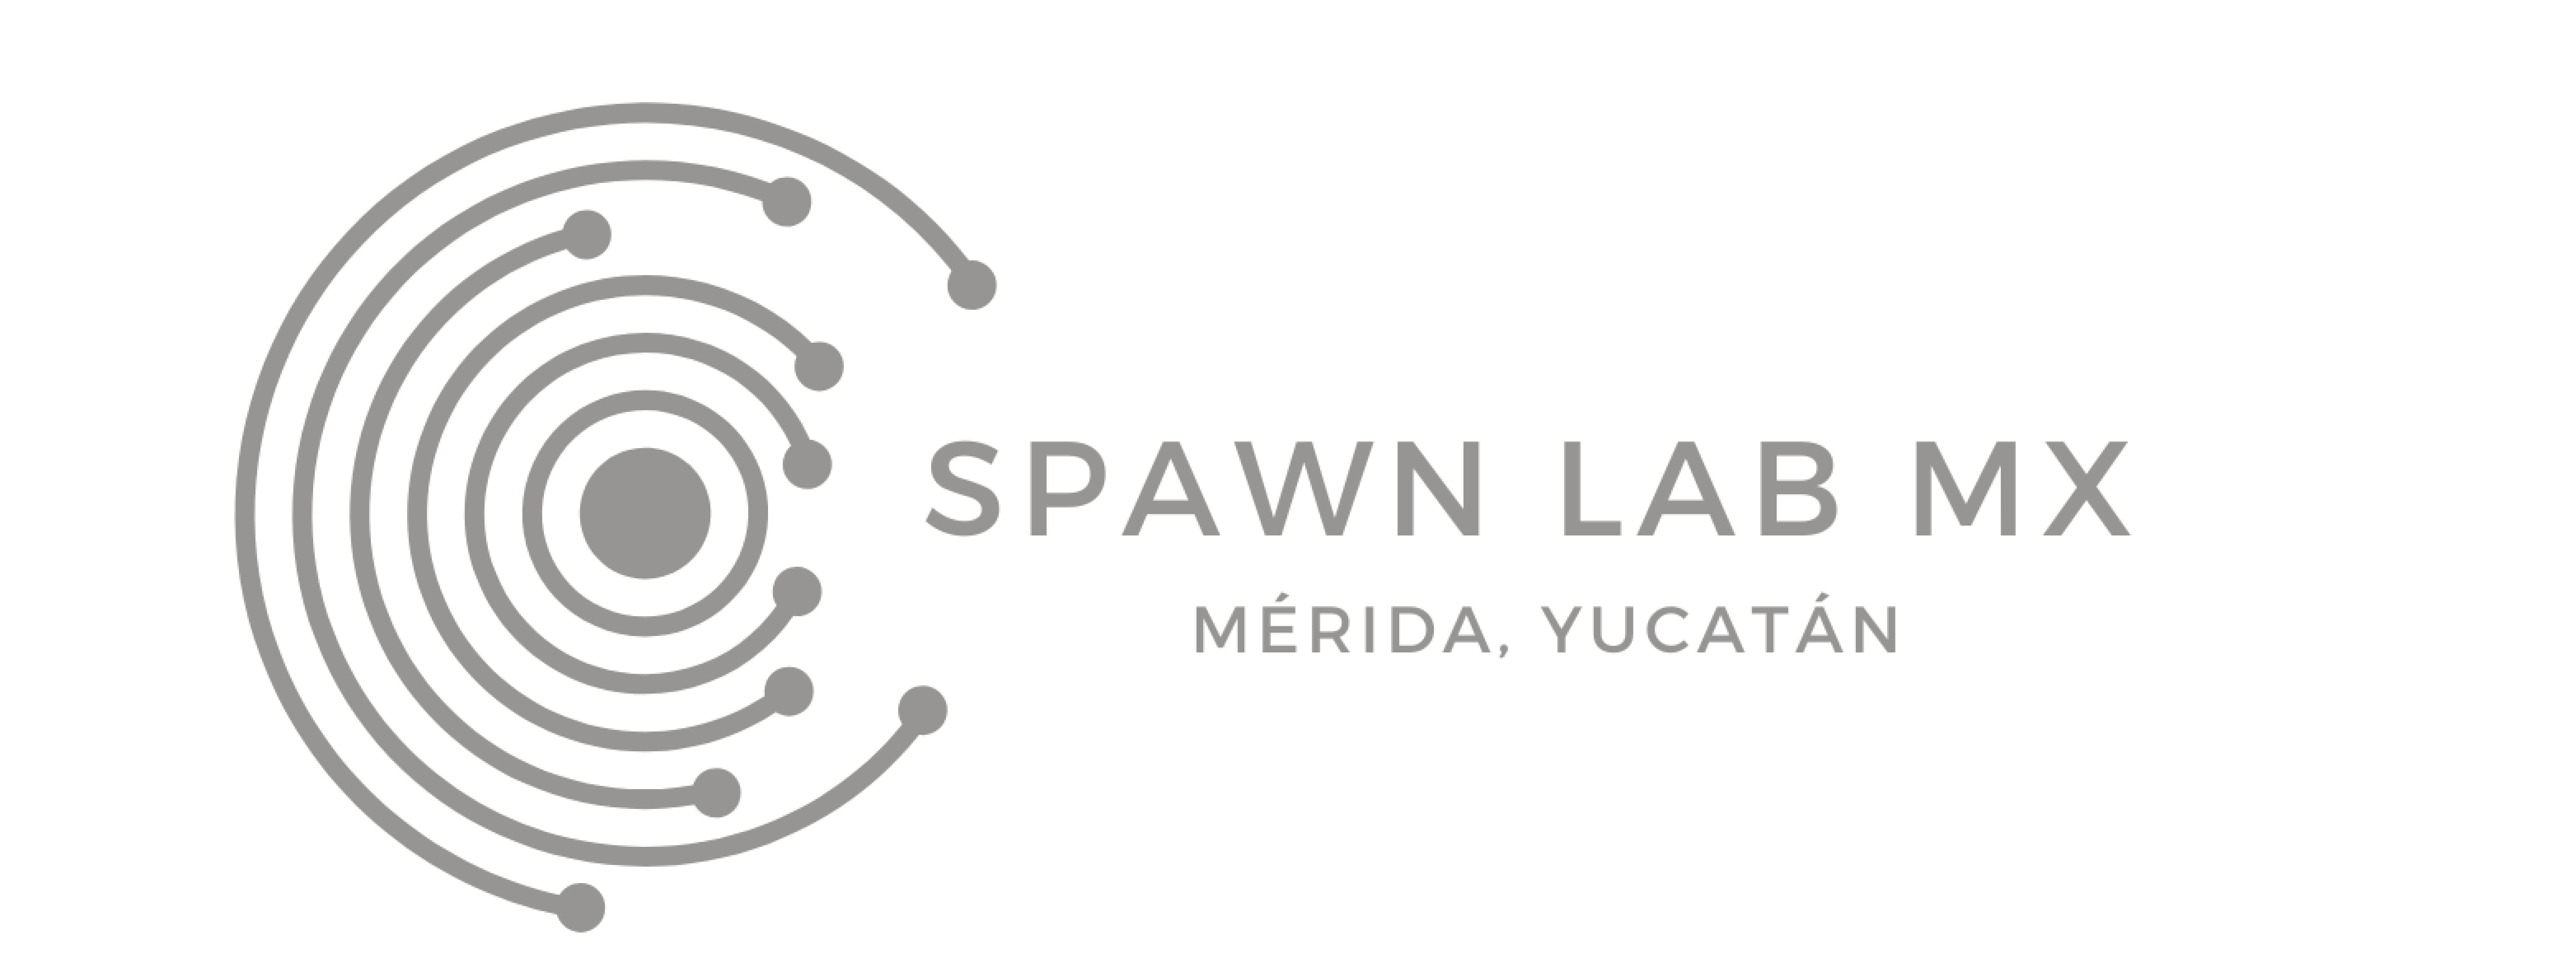 Spawn Lab MX